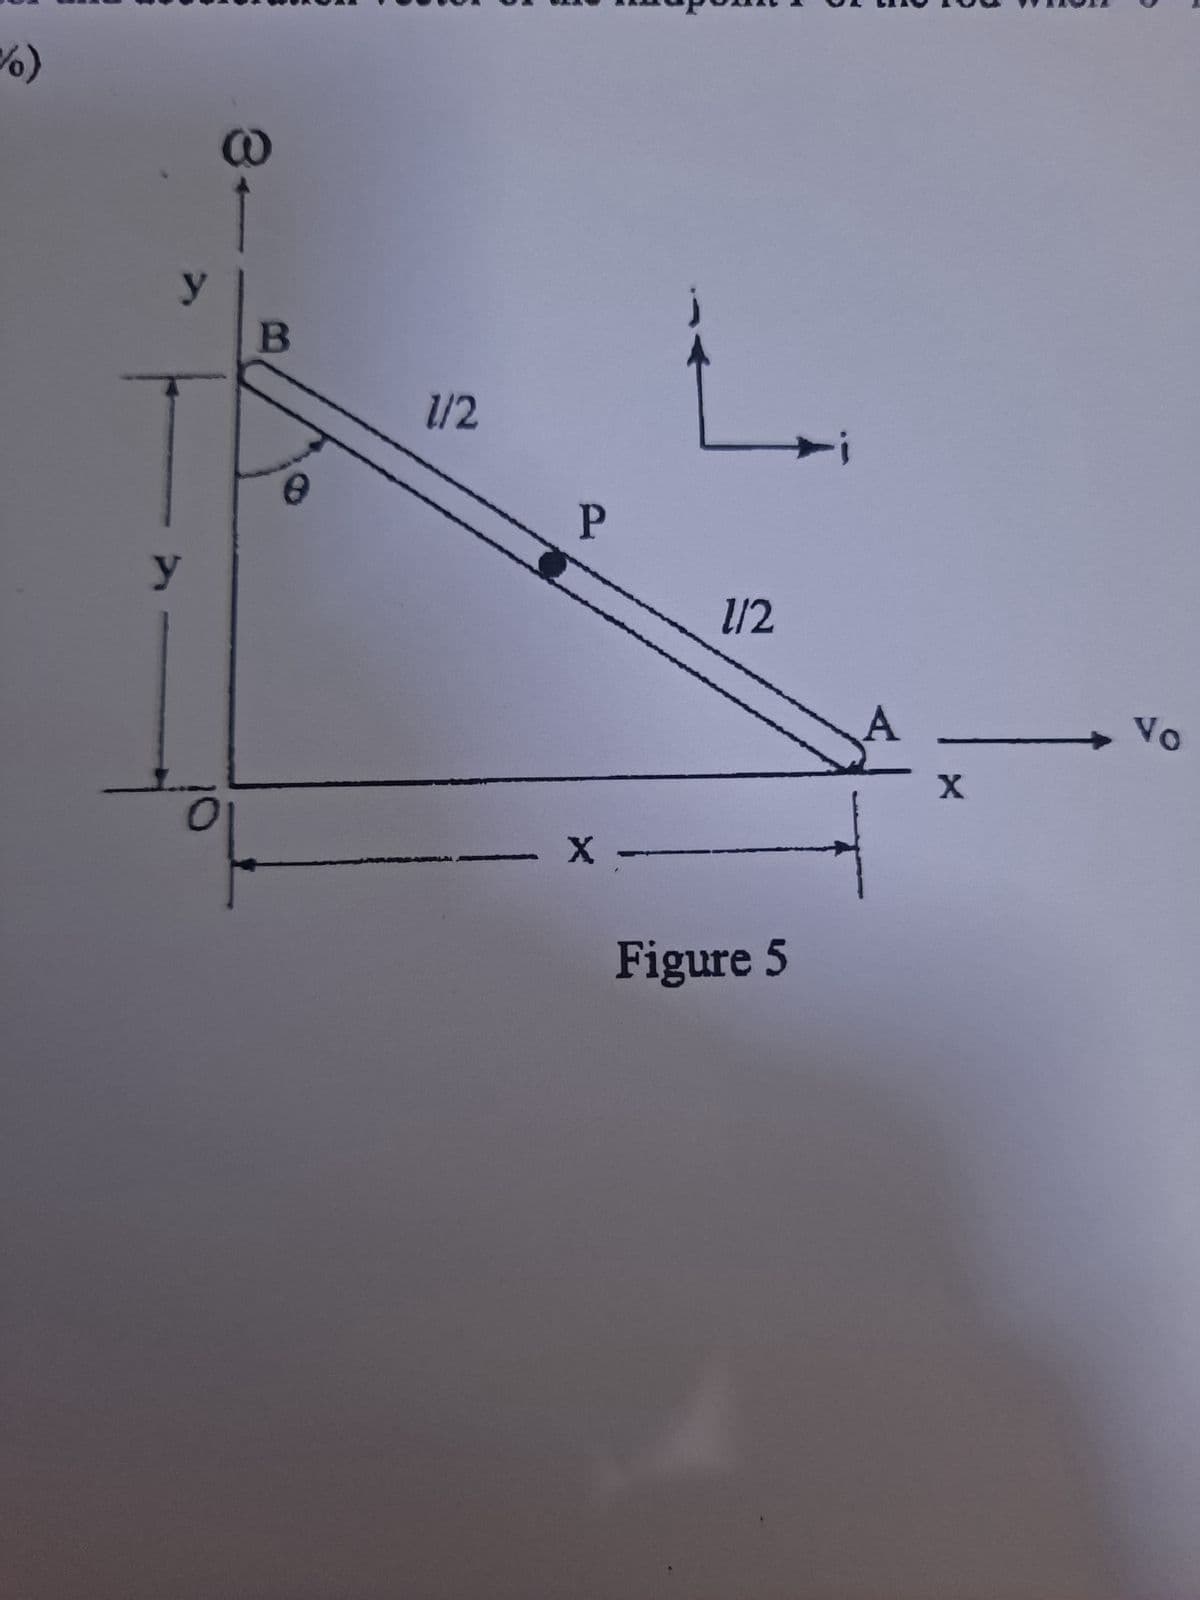 6)
y
y
3+
B
to
0
1/2
P
- x -
1/2
Figure
Vo